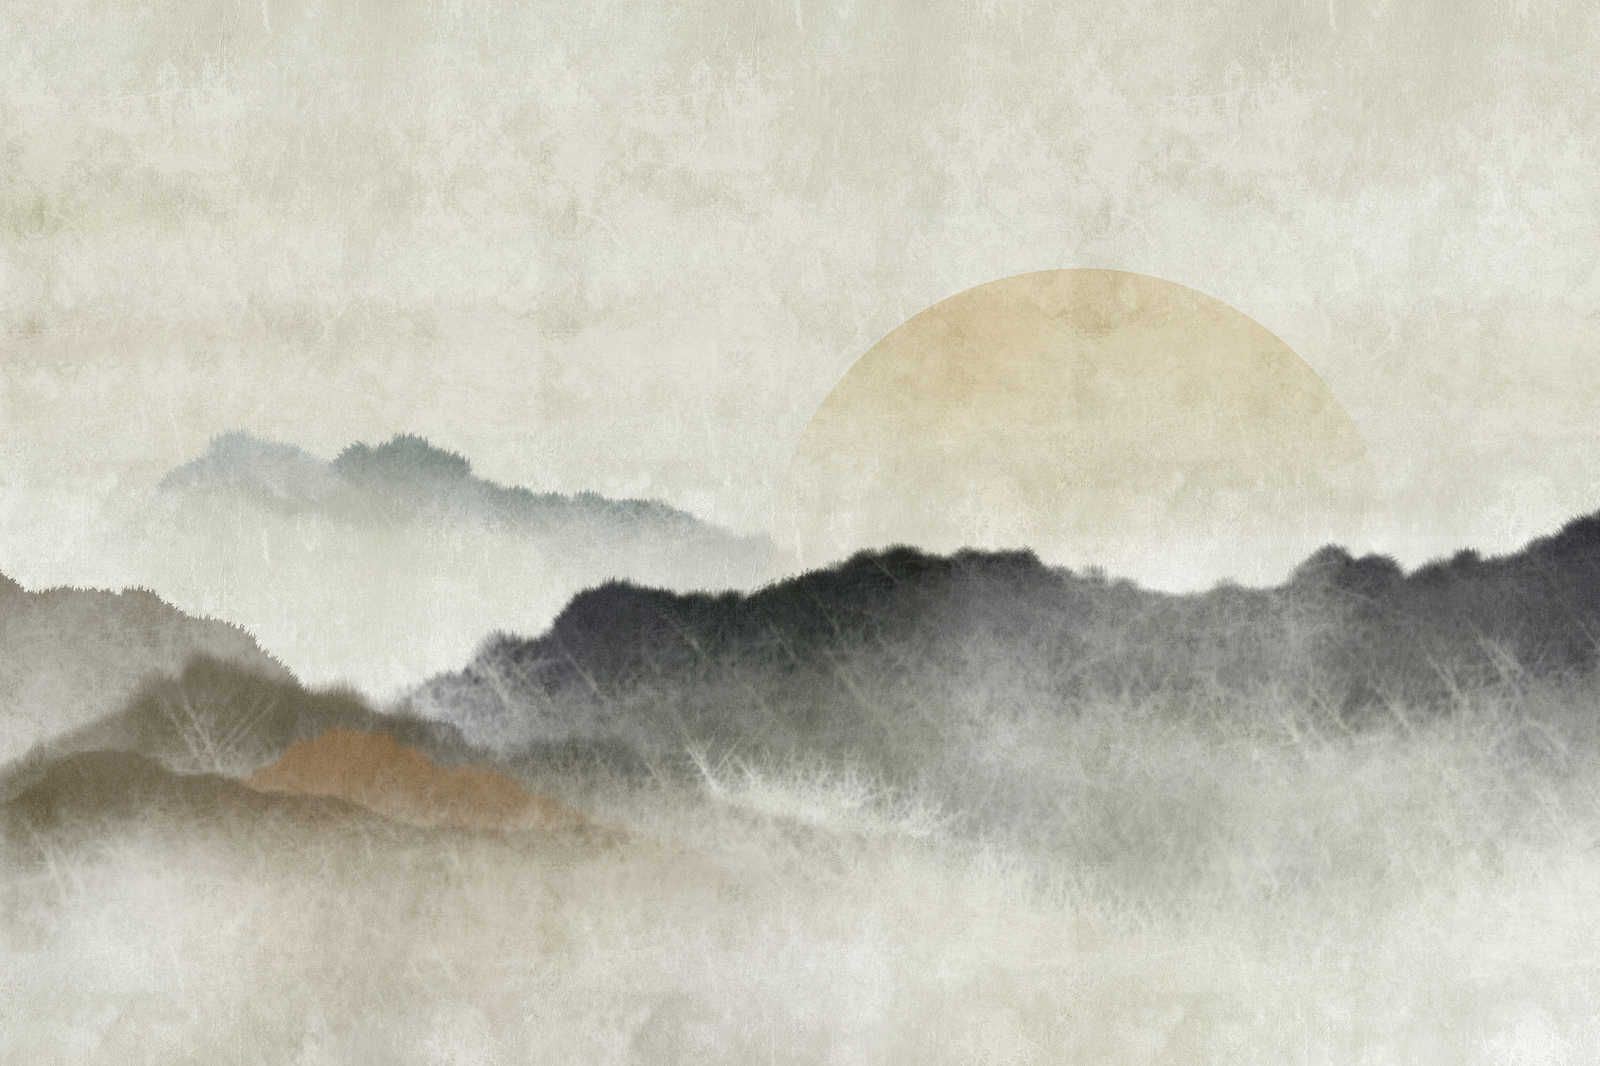             Akaishi 1 - Leinwandbild Asian Print Bergkette im Morgengrauen – 0,90 m x 0,60 m
        